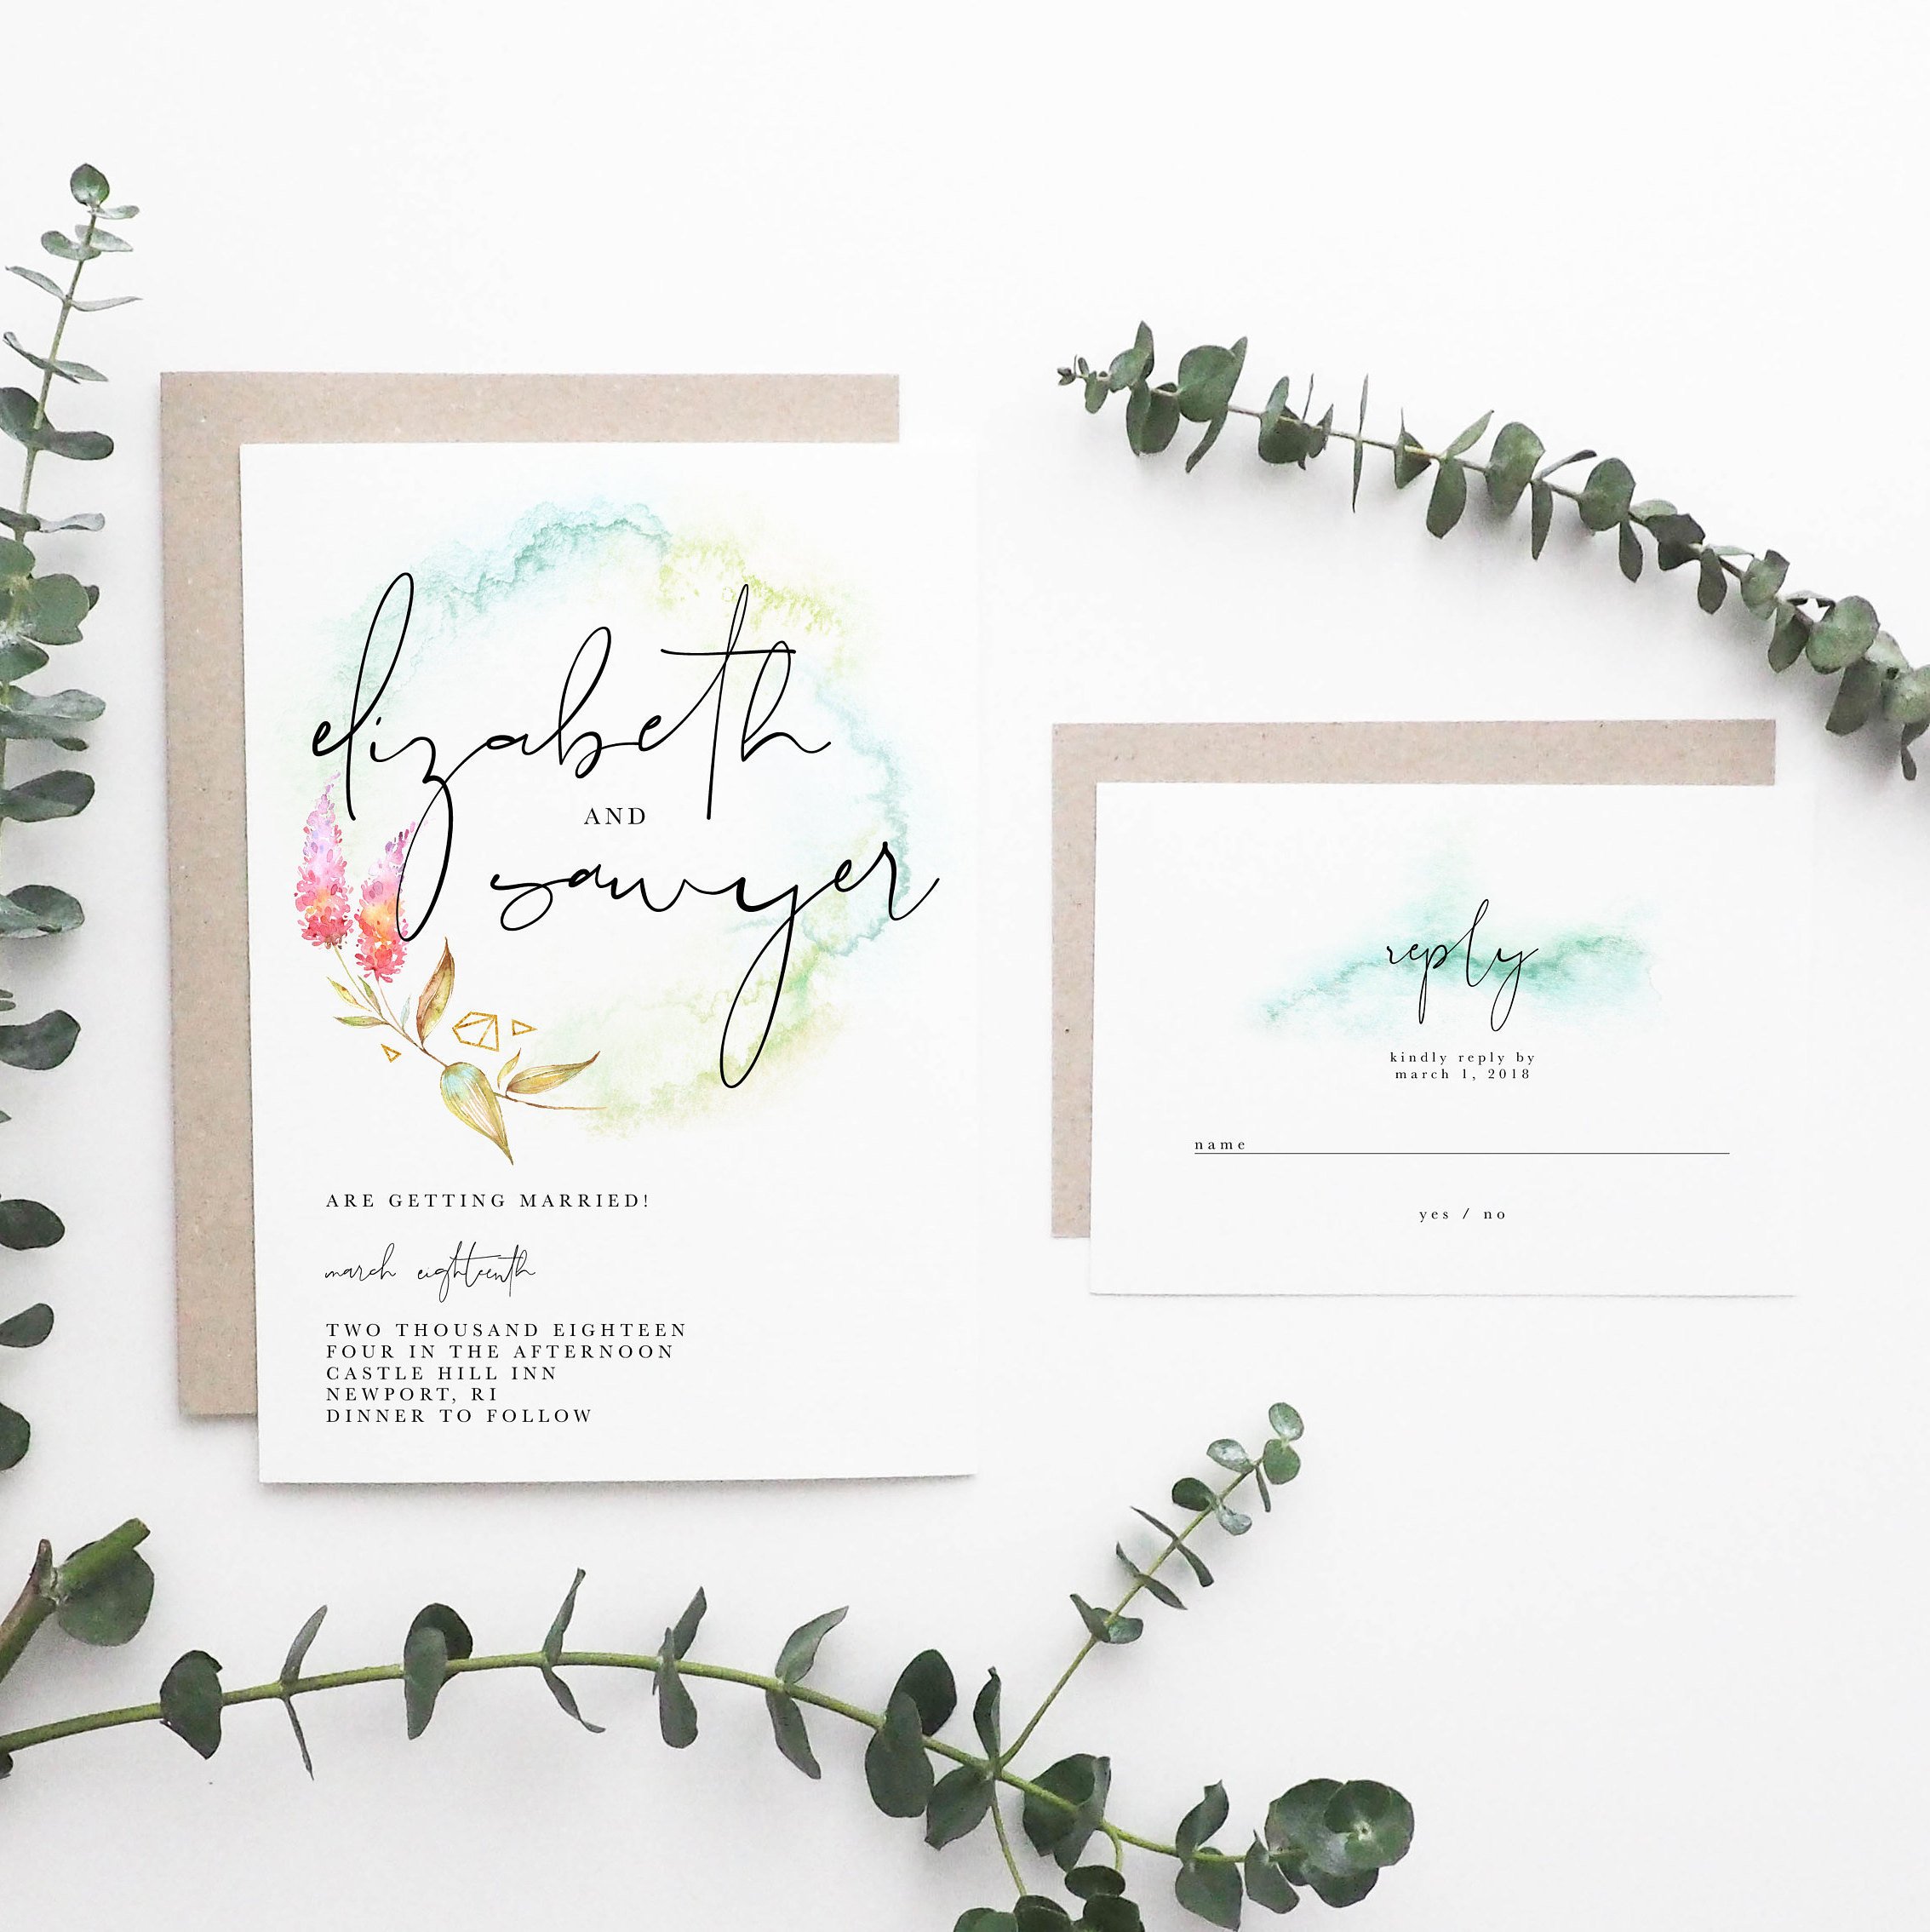 Spring Watercolor Wedding Invitations - The Overwhelmed Bride Wedding Blog